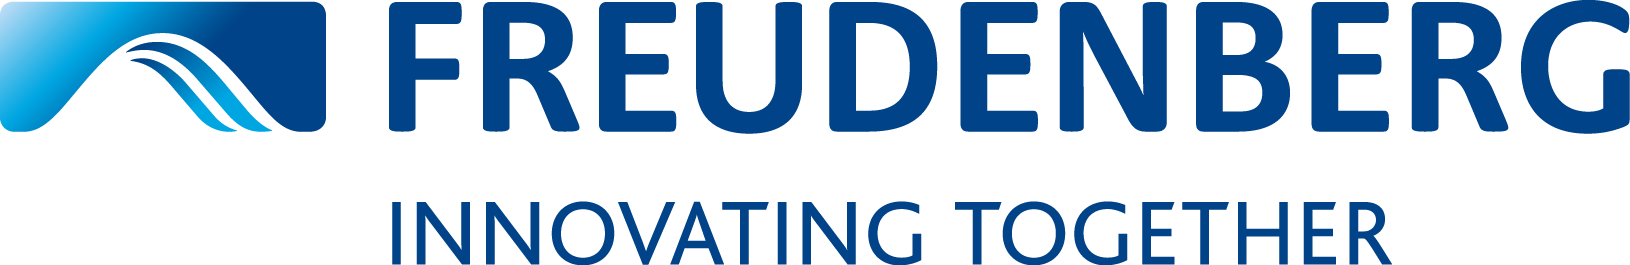 Freudenberg Logo